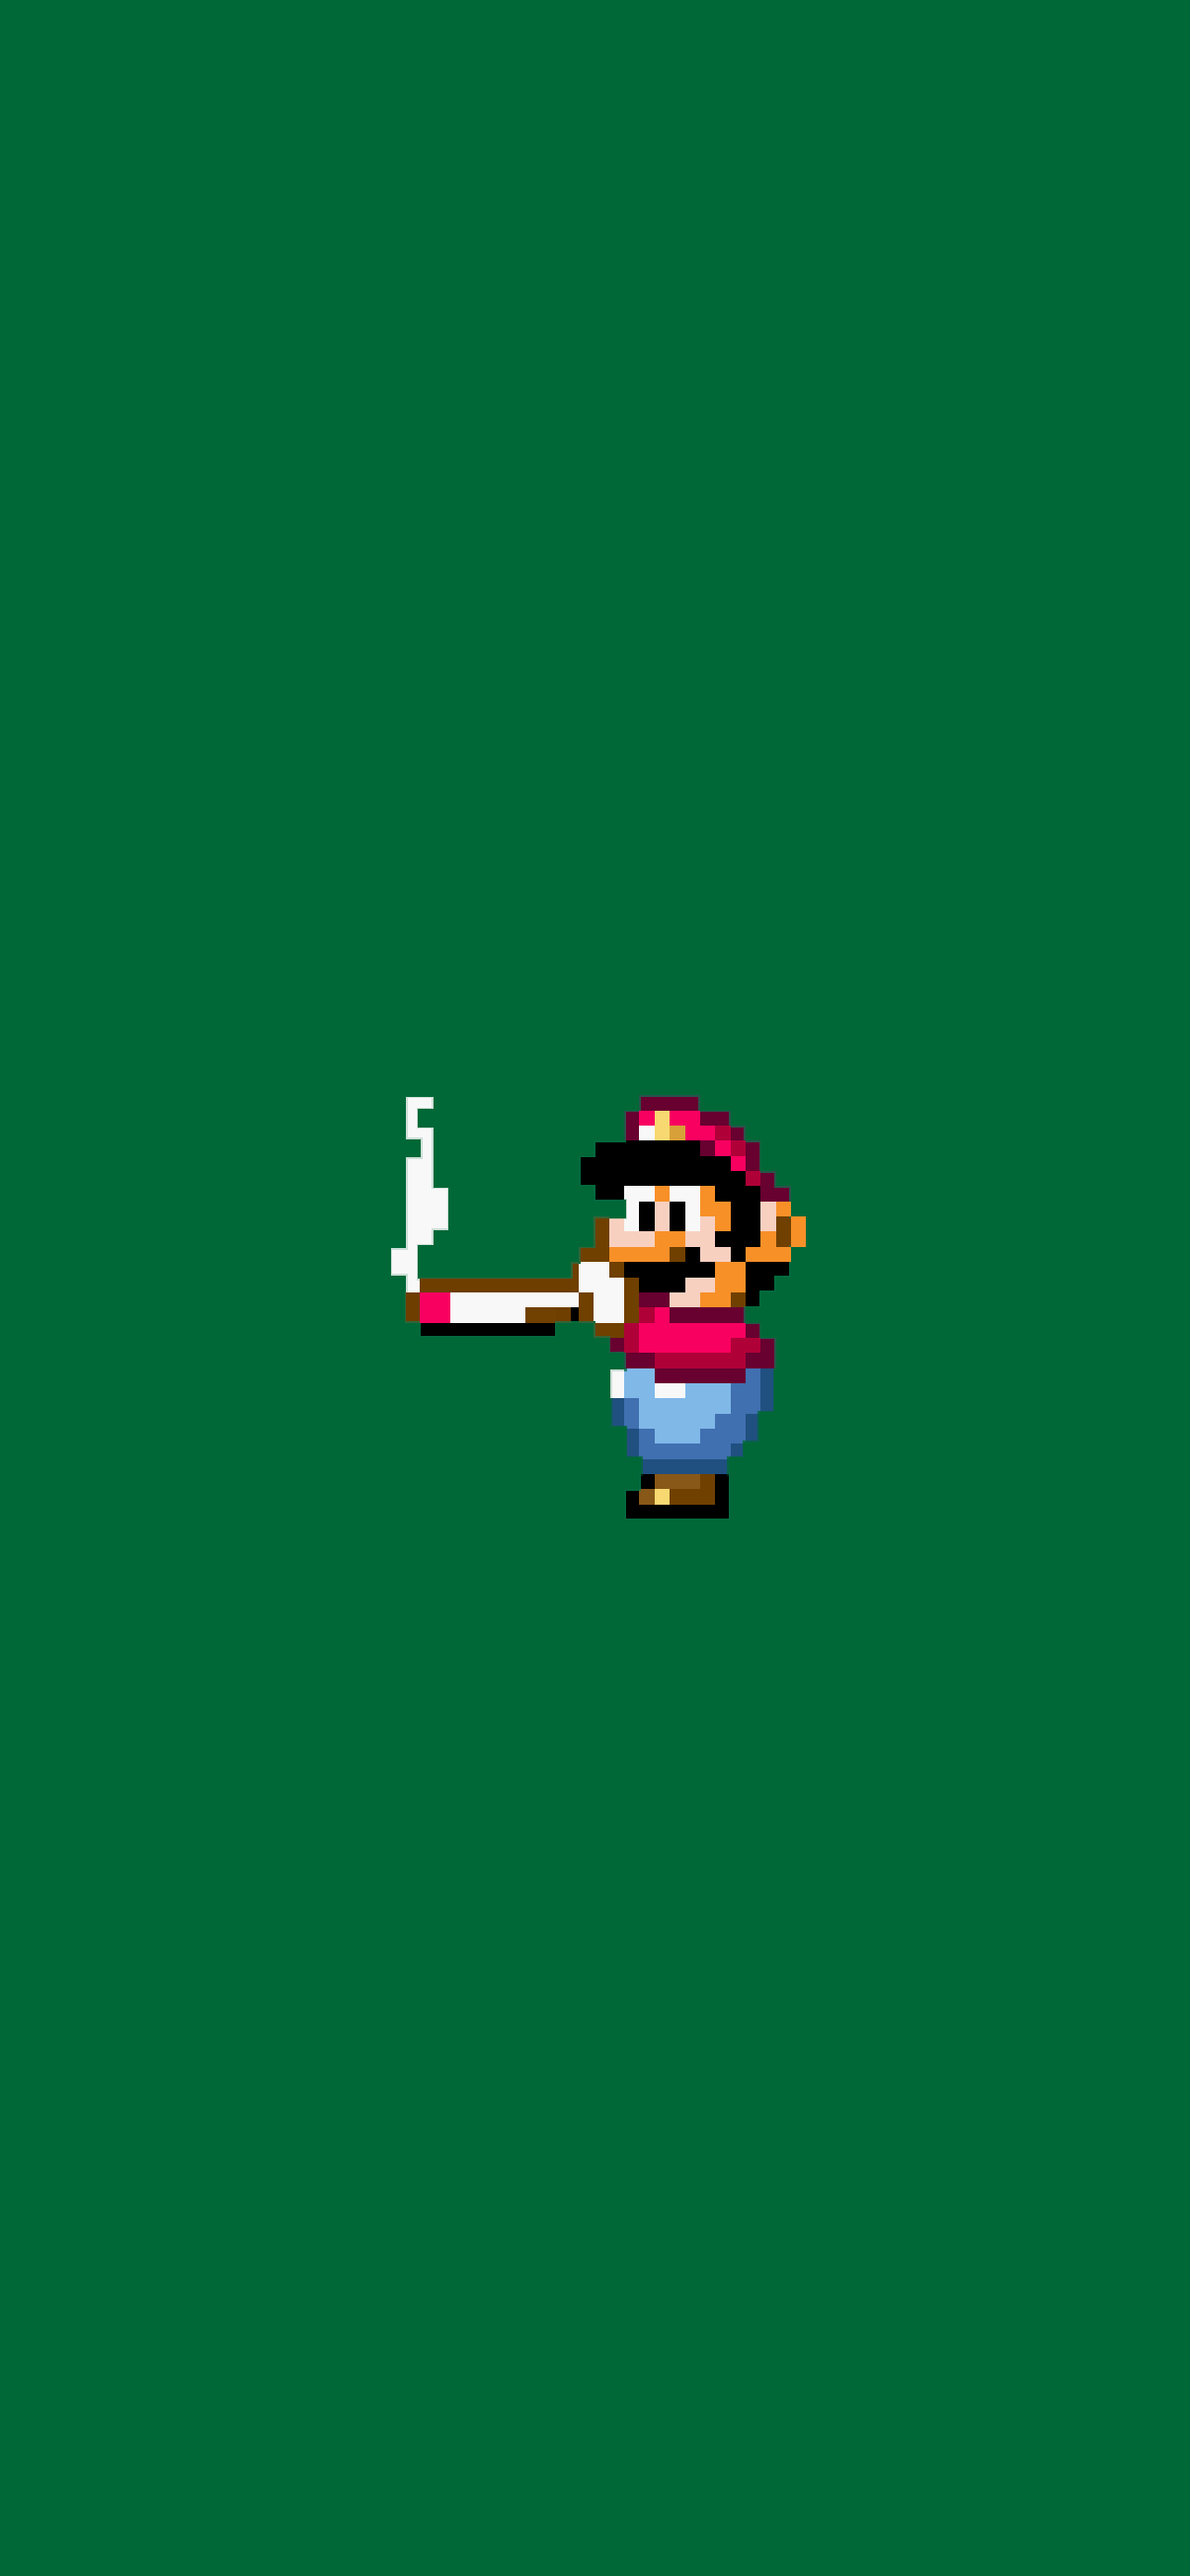 Mario with a cigarette - Super Mario